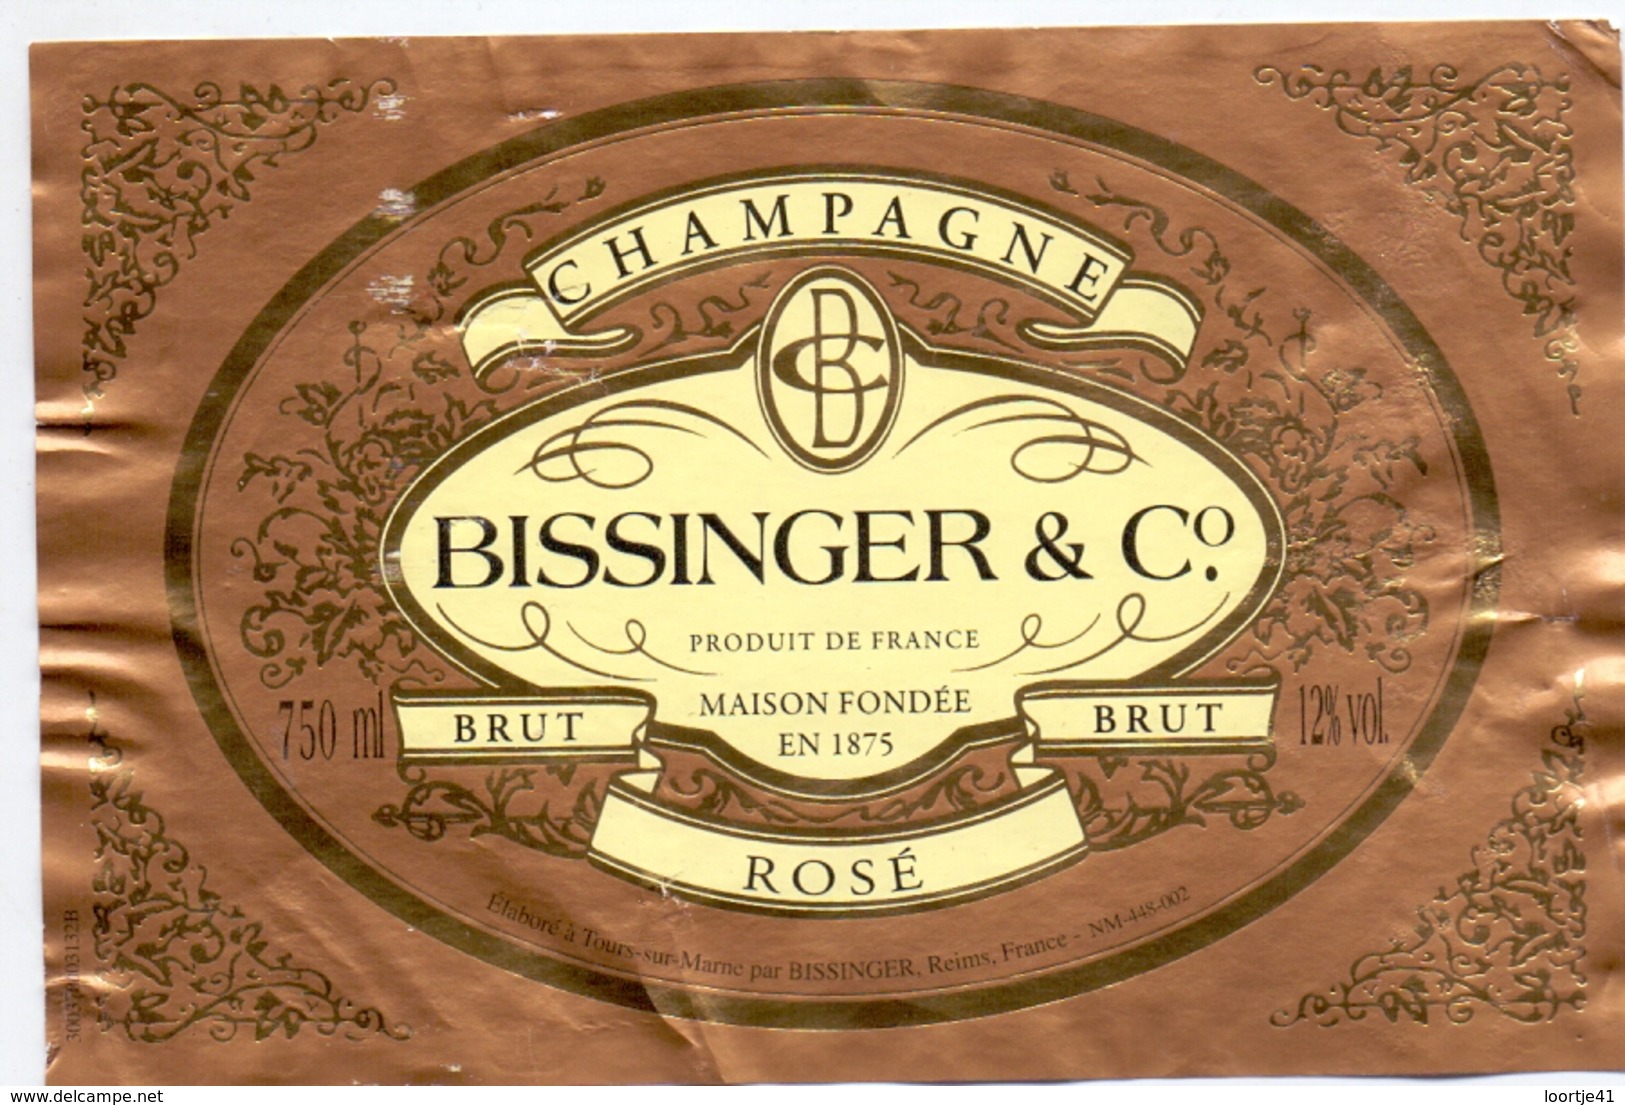 Champagne - etiket etiquette - - - vin Rosé wijn - Champagne - Bissinger